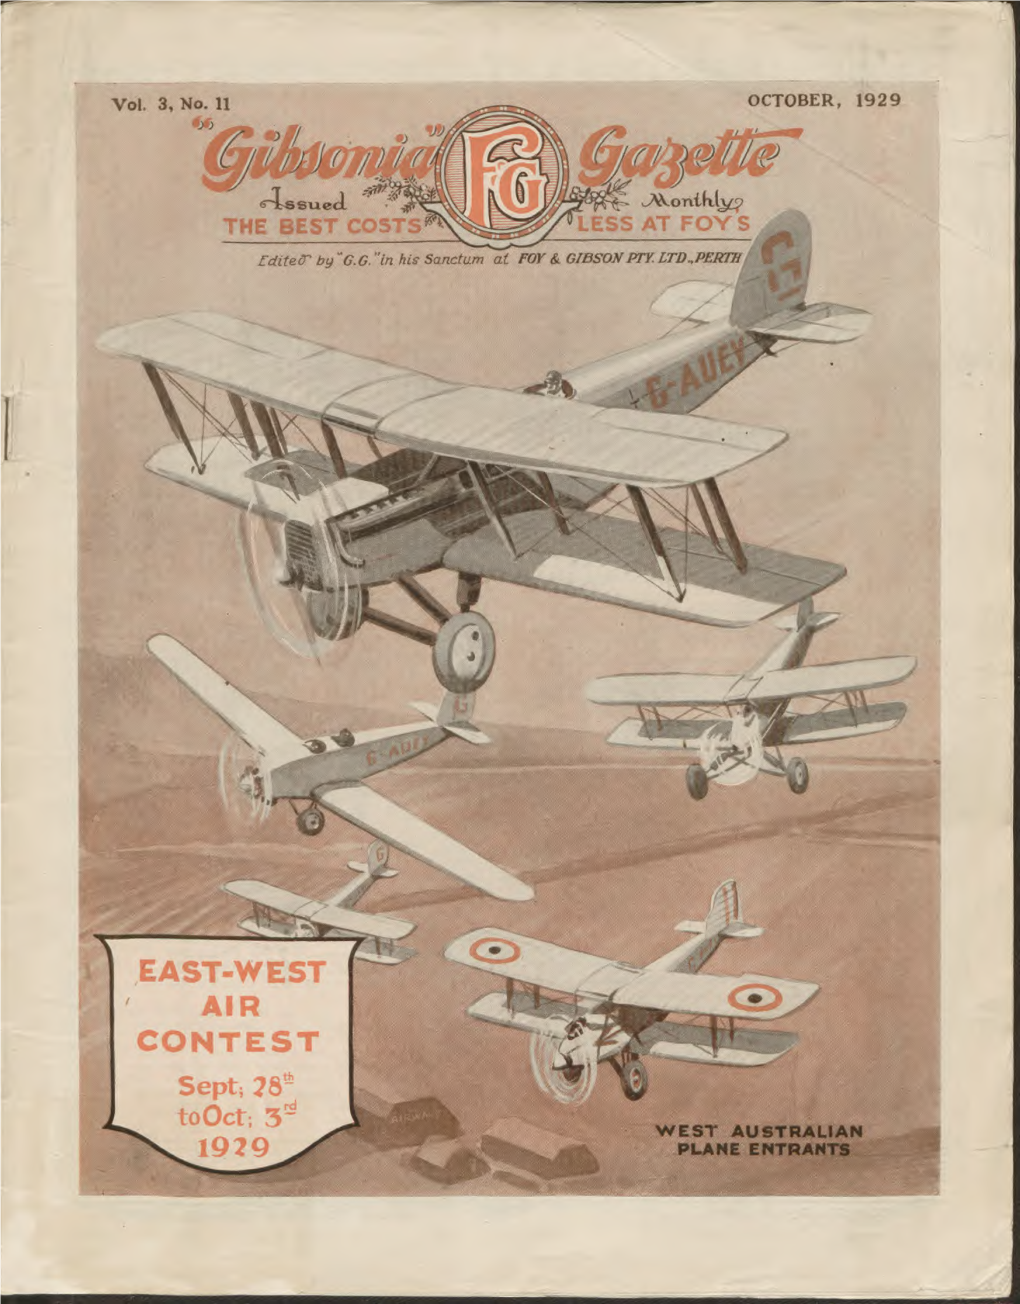 Gibsonia Gazette, Perth: Vol. 3, No. 11 (October, 1929)